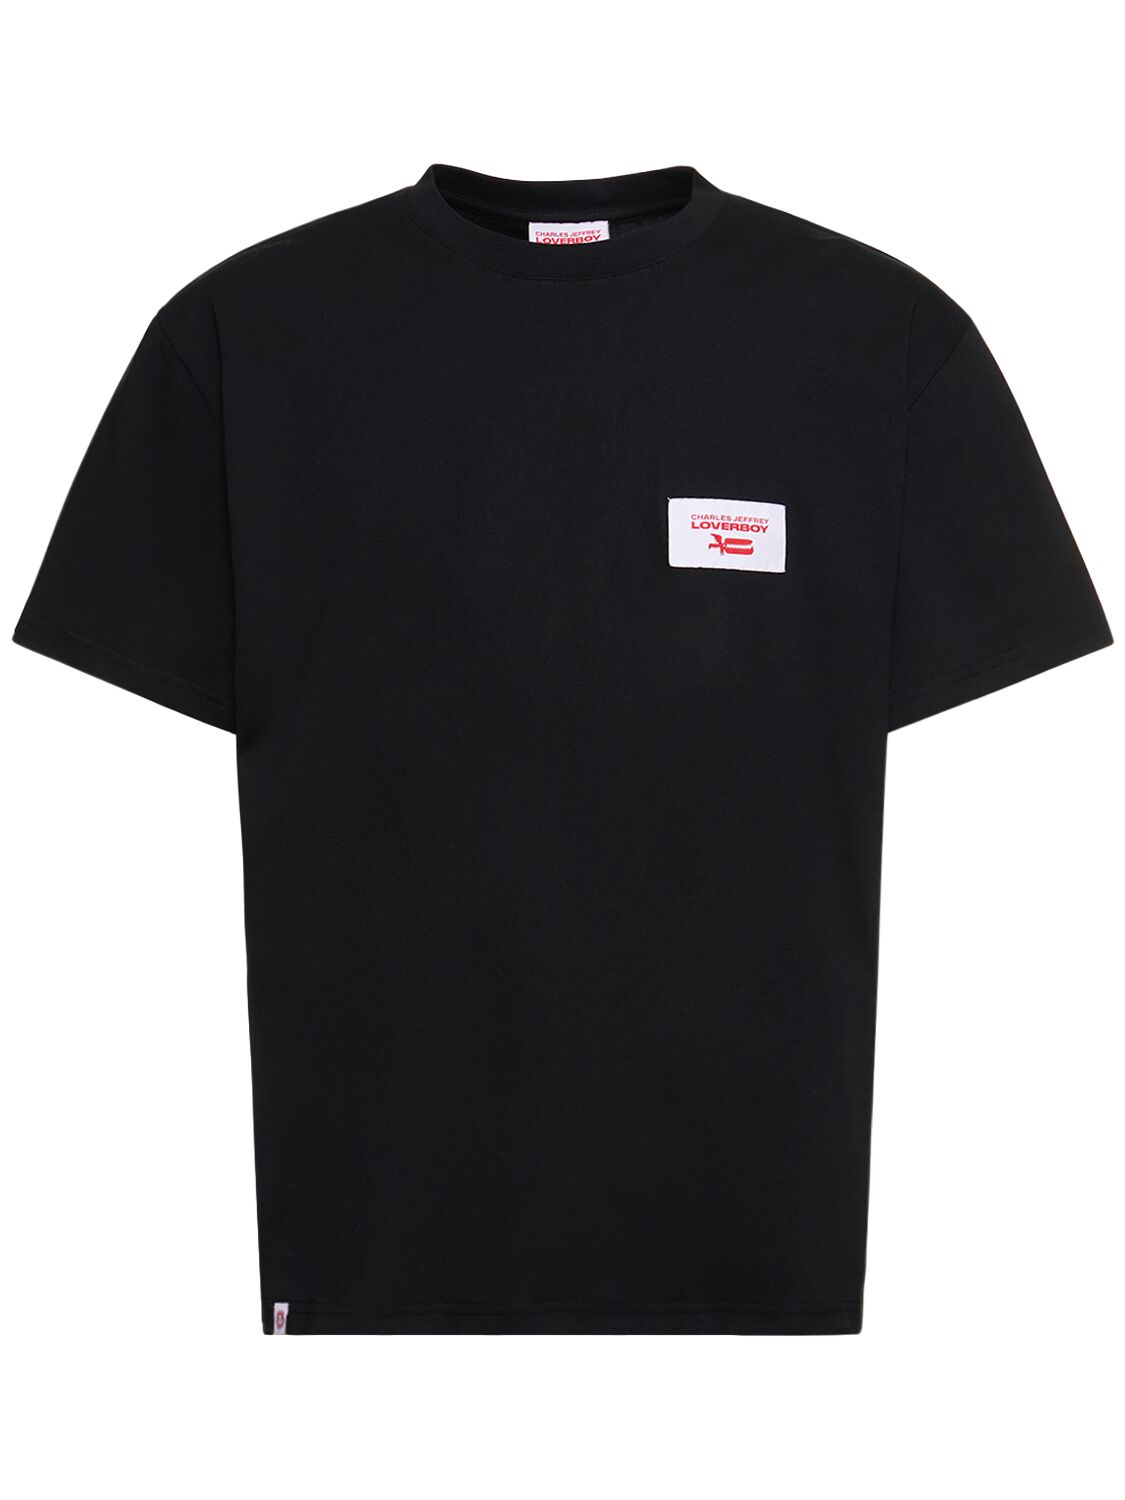 Charles Jeffrey Loverboy Label T-shirt In Black